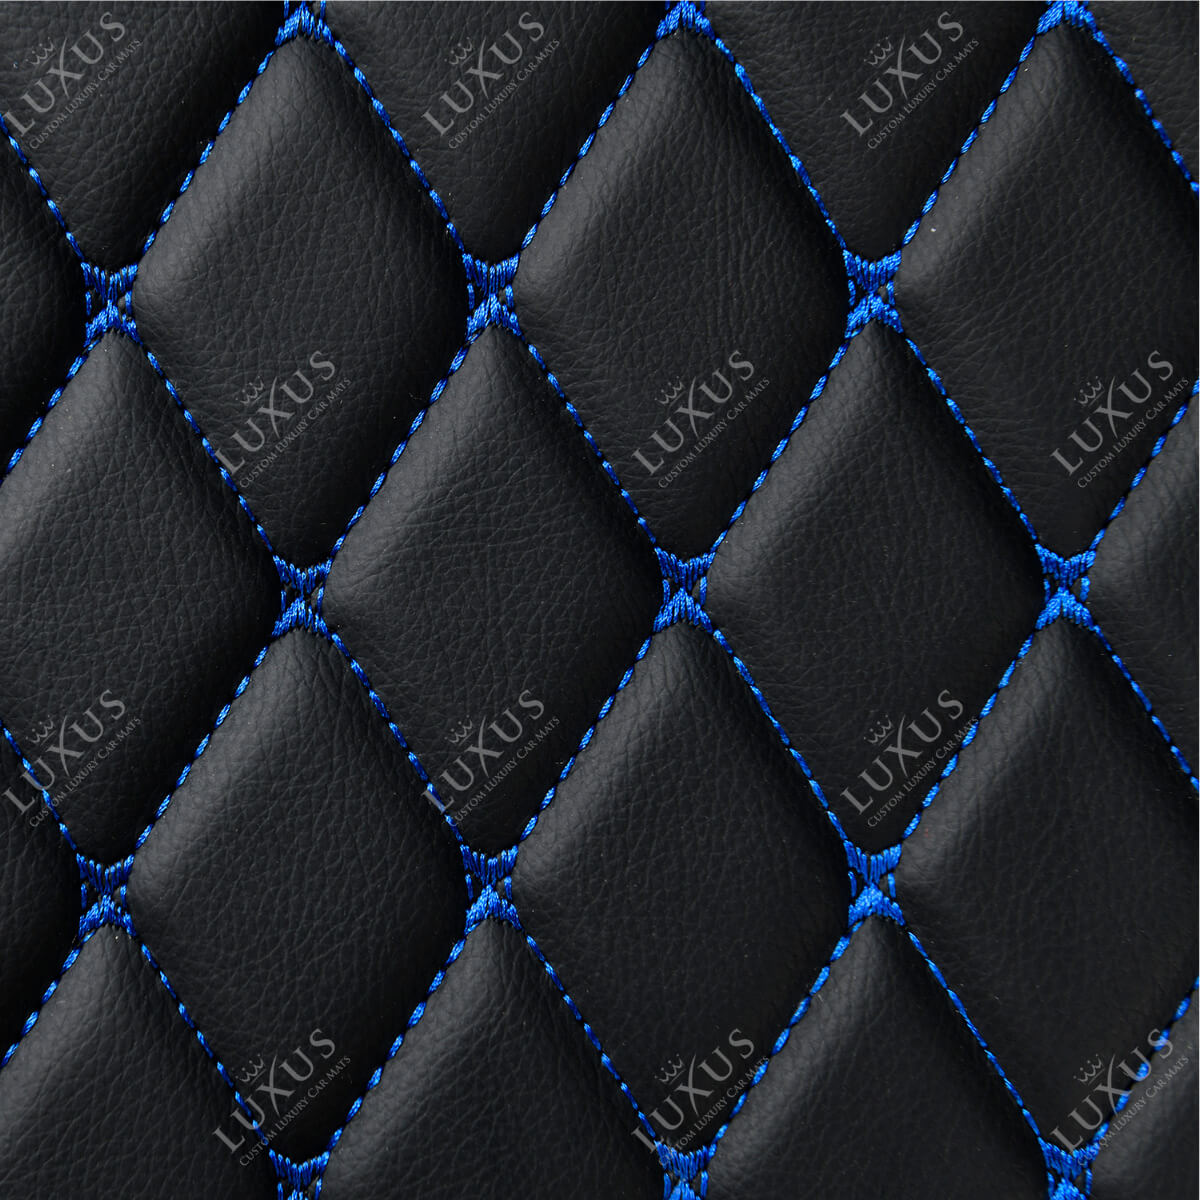 Luxus Car Mats™ - Tapete para maletero/maletero de cuero de lujo con costuras negras y azules